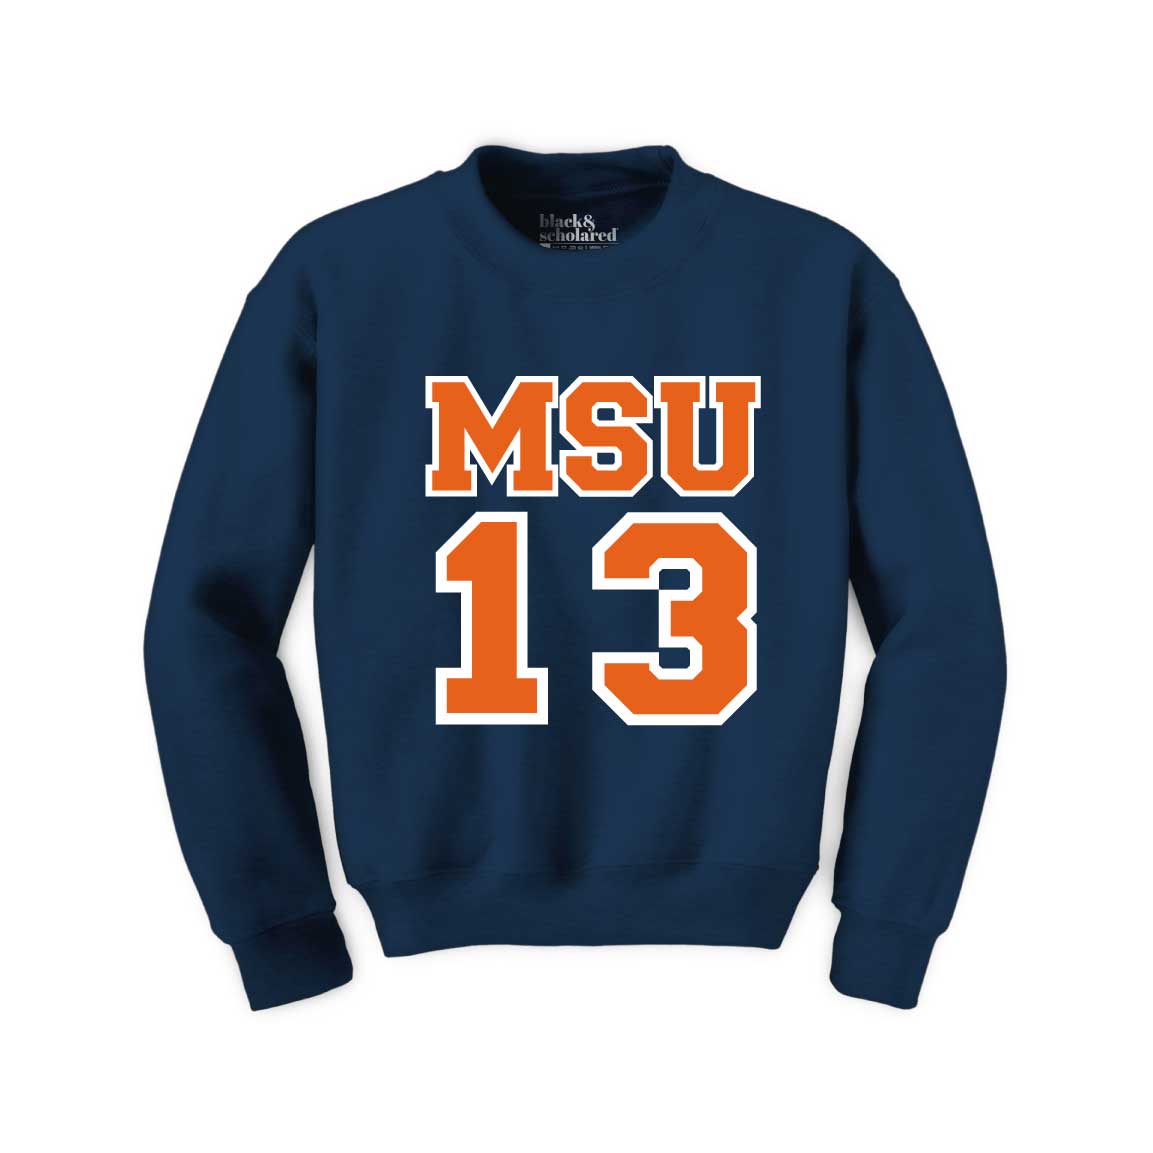 CUSTOM Morgan State Sweatshirt | Customize GRADUATION YEAR